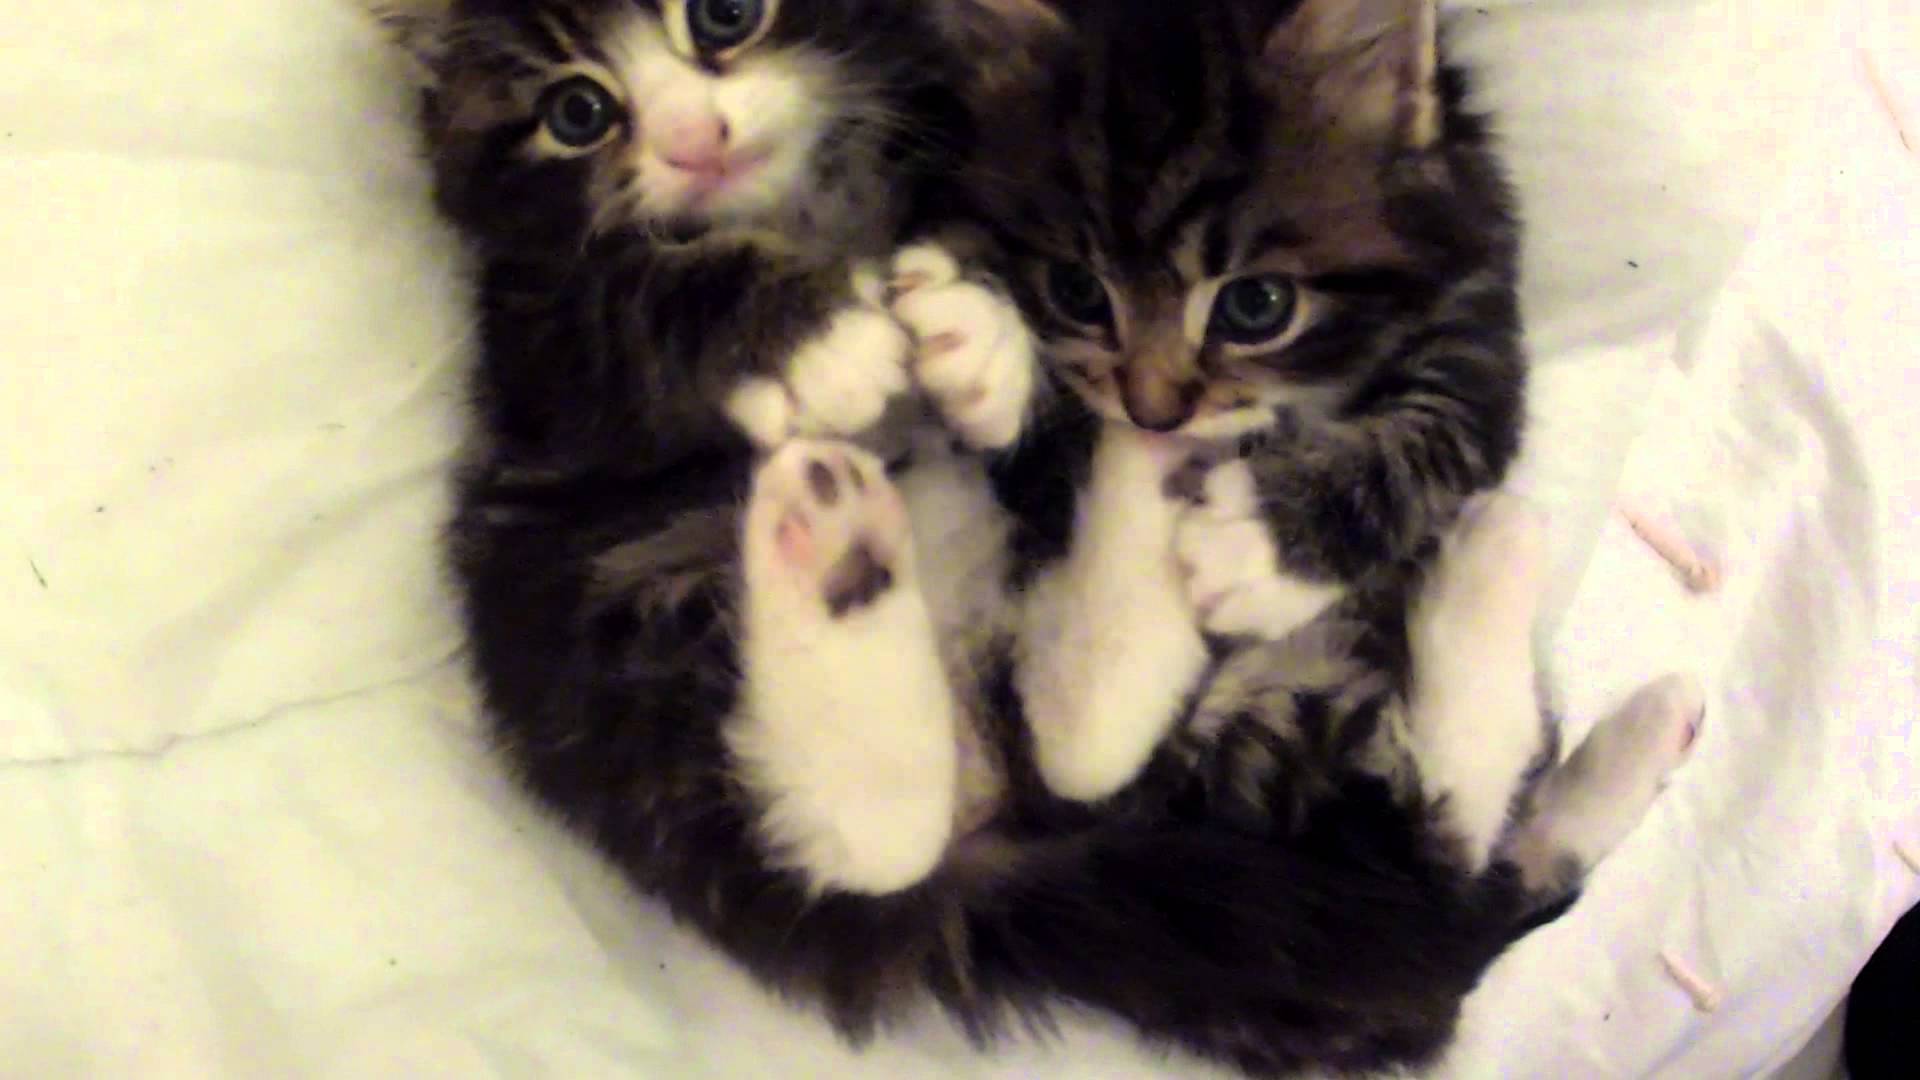 Cute Tabby Kitten's! (SMALL KITTENS) - YouTube